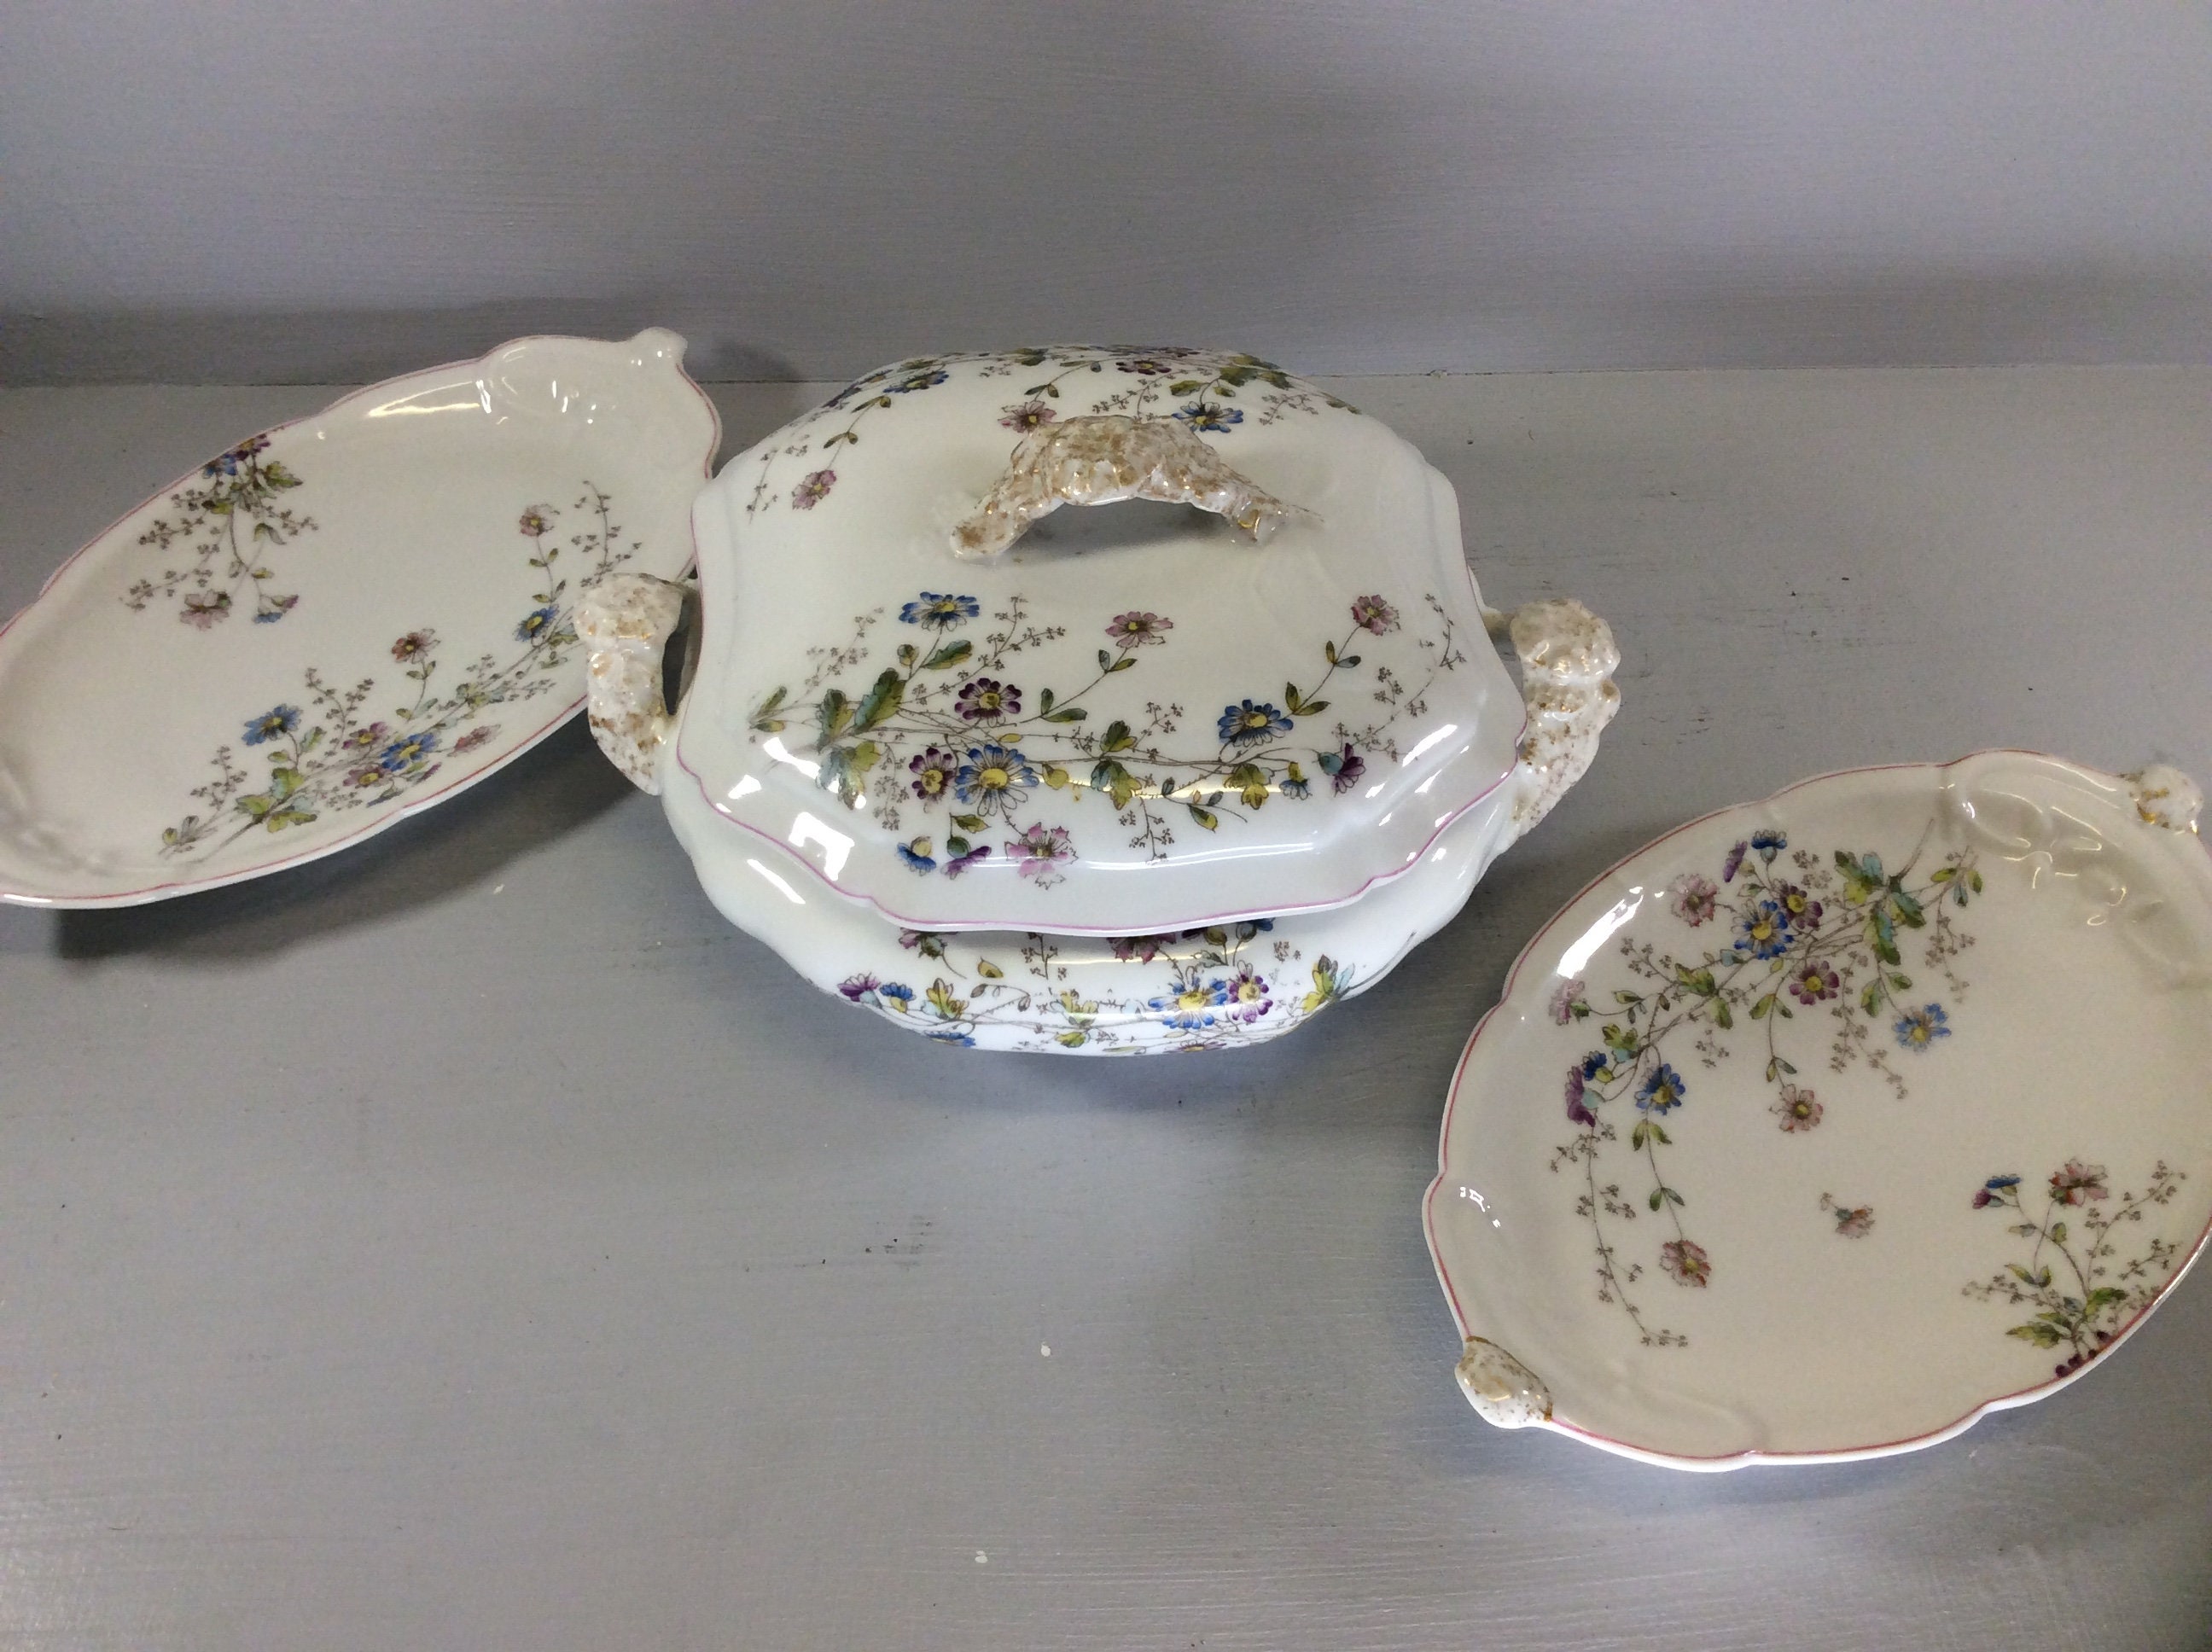 Antique G Demartine Small Tureen & Raviers, Rare Français Limoges Porcelain Tableware